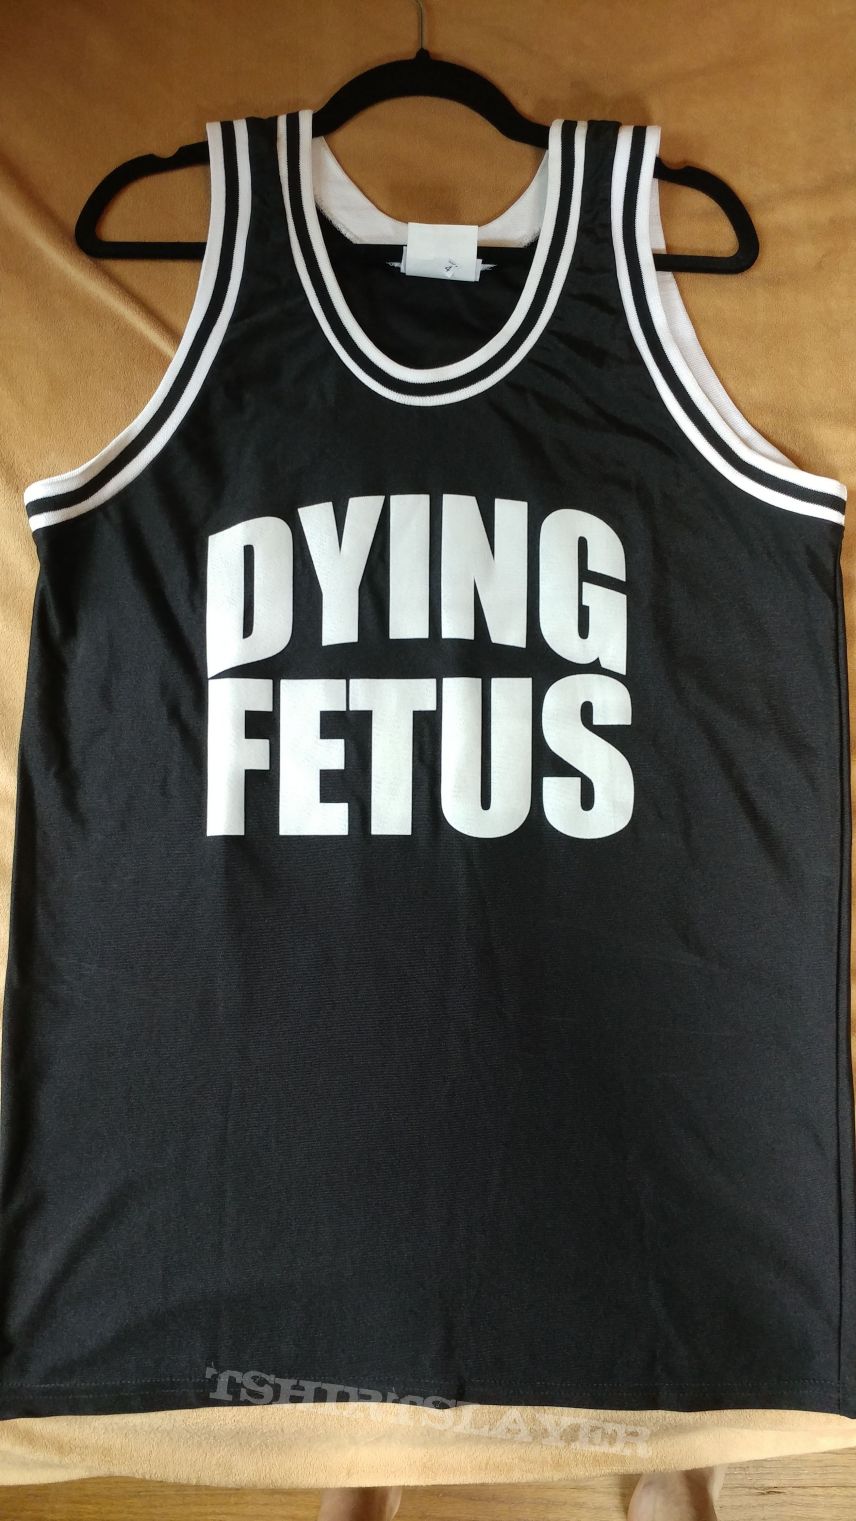 Dying Fetus jersey | TShirtSlayer TShirt and BattleJacket Gallery